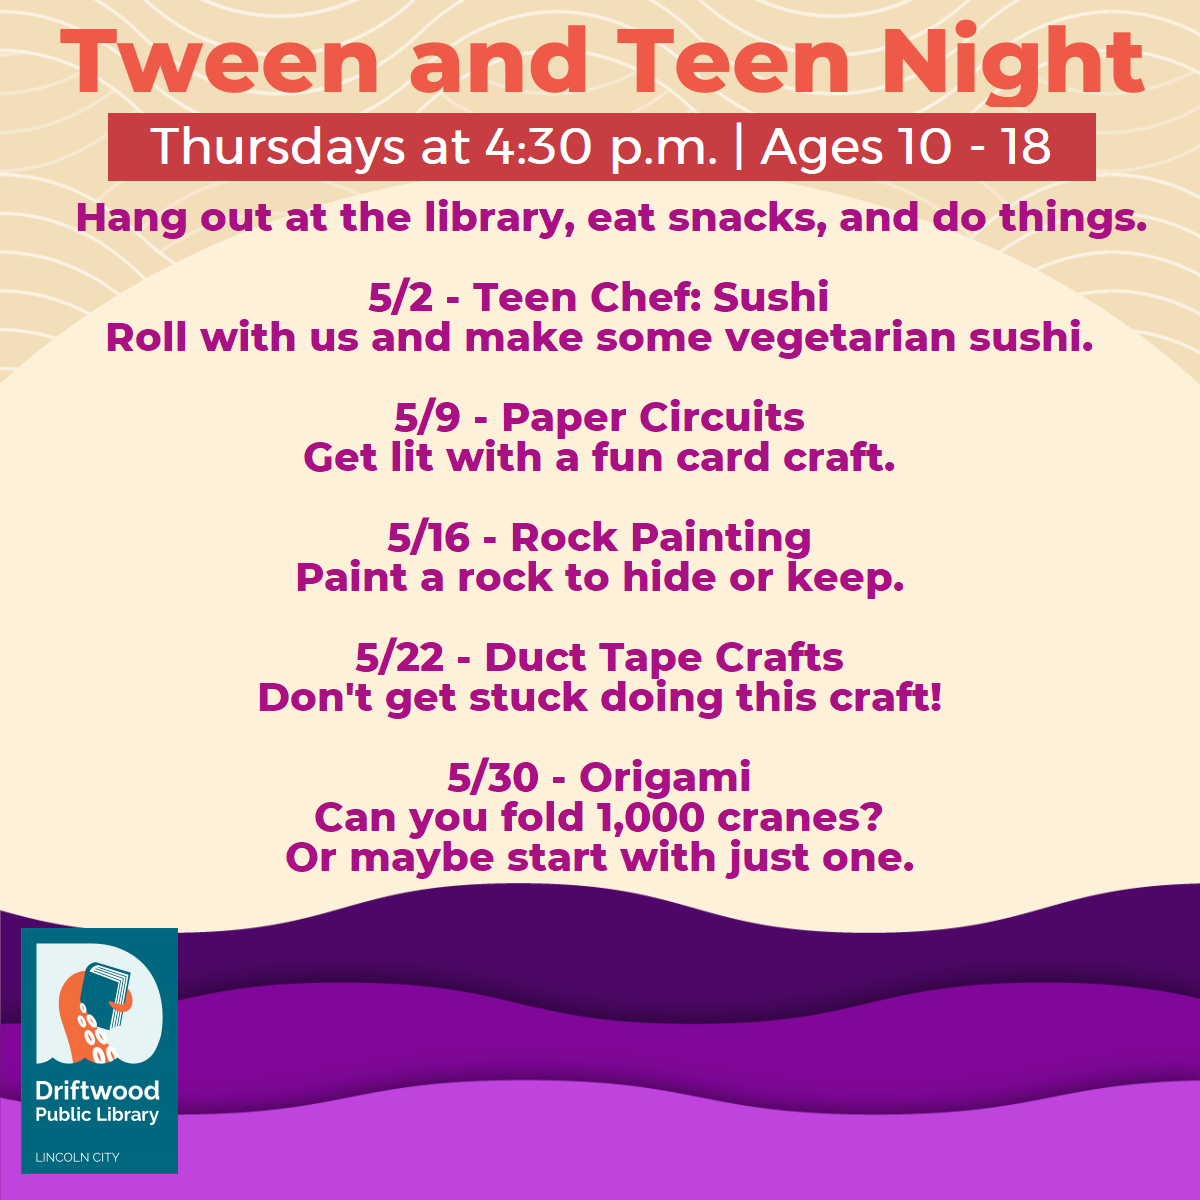 Tween and Teen Night